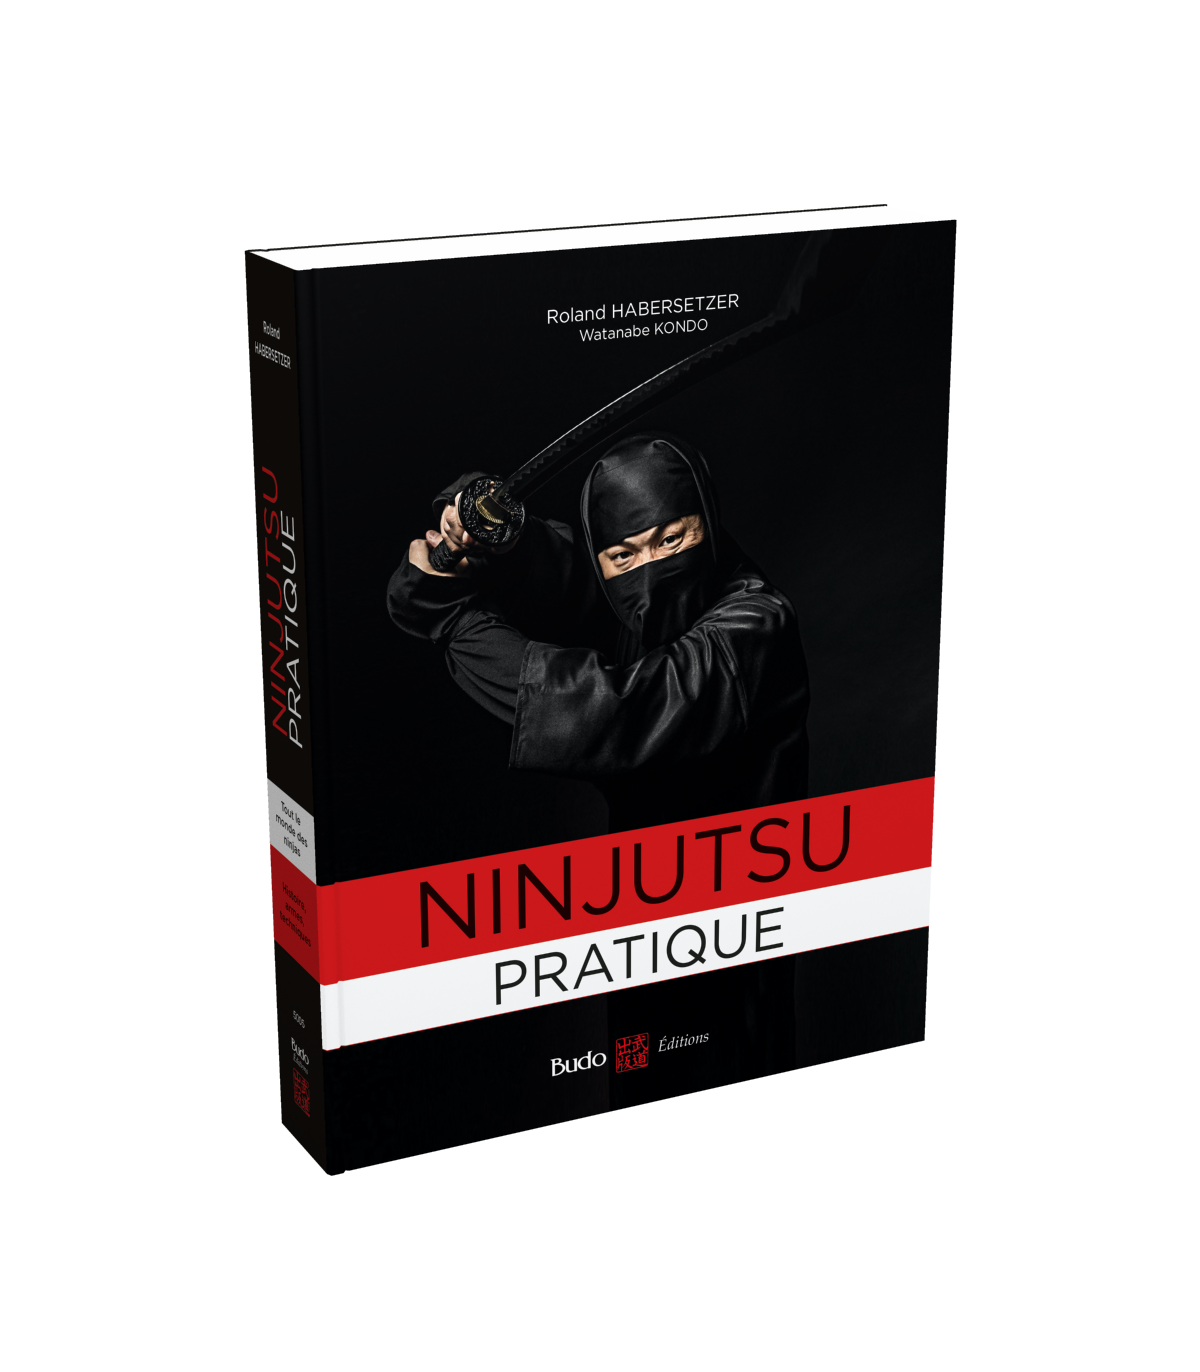 Ninjutsu pratique - Budo Editions